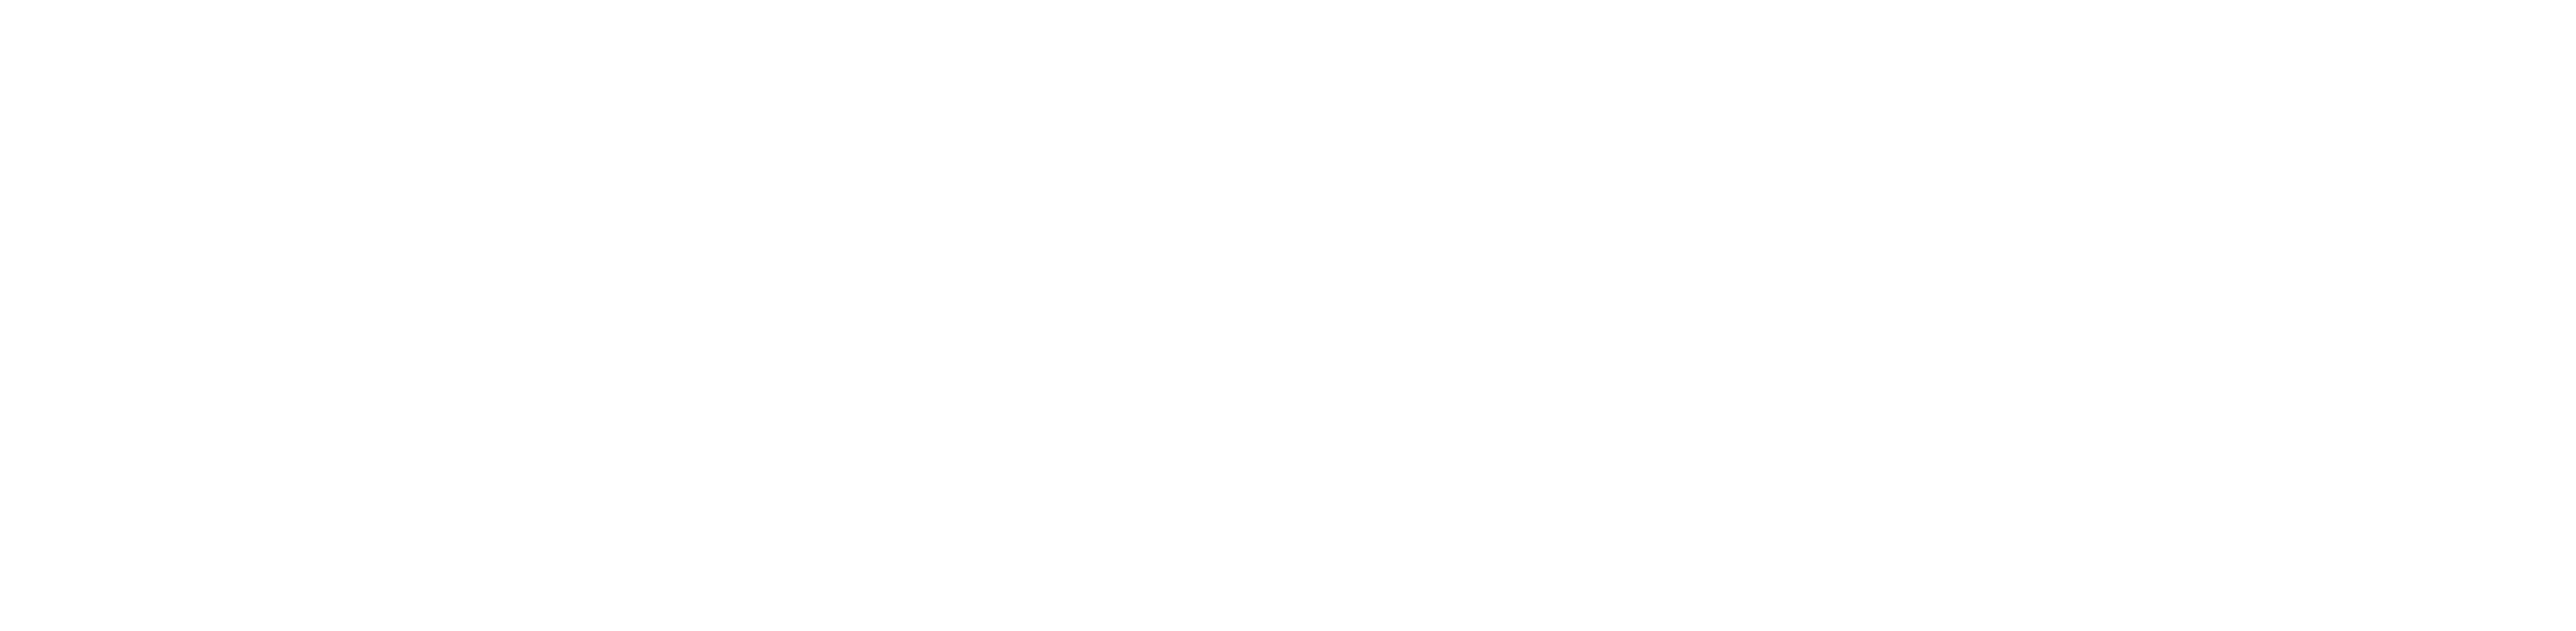 HOTEL POSADA CUETZALAN